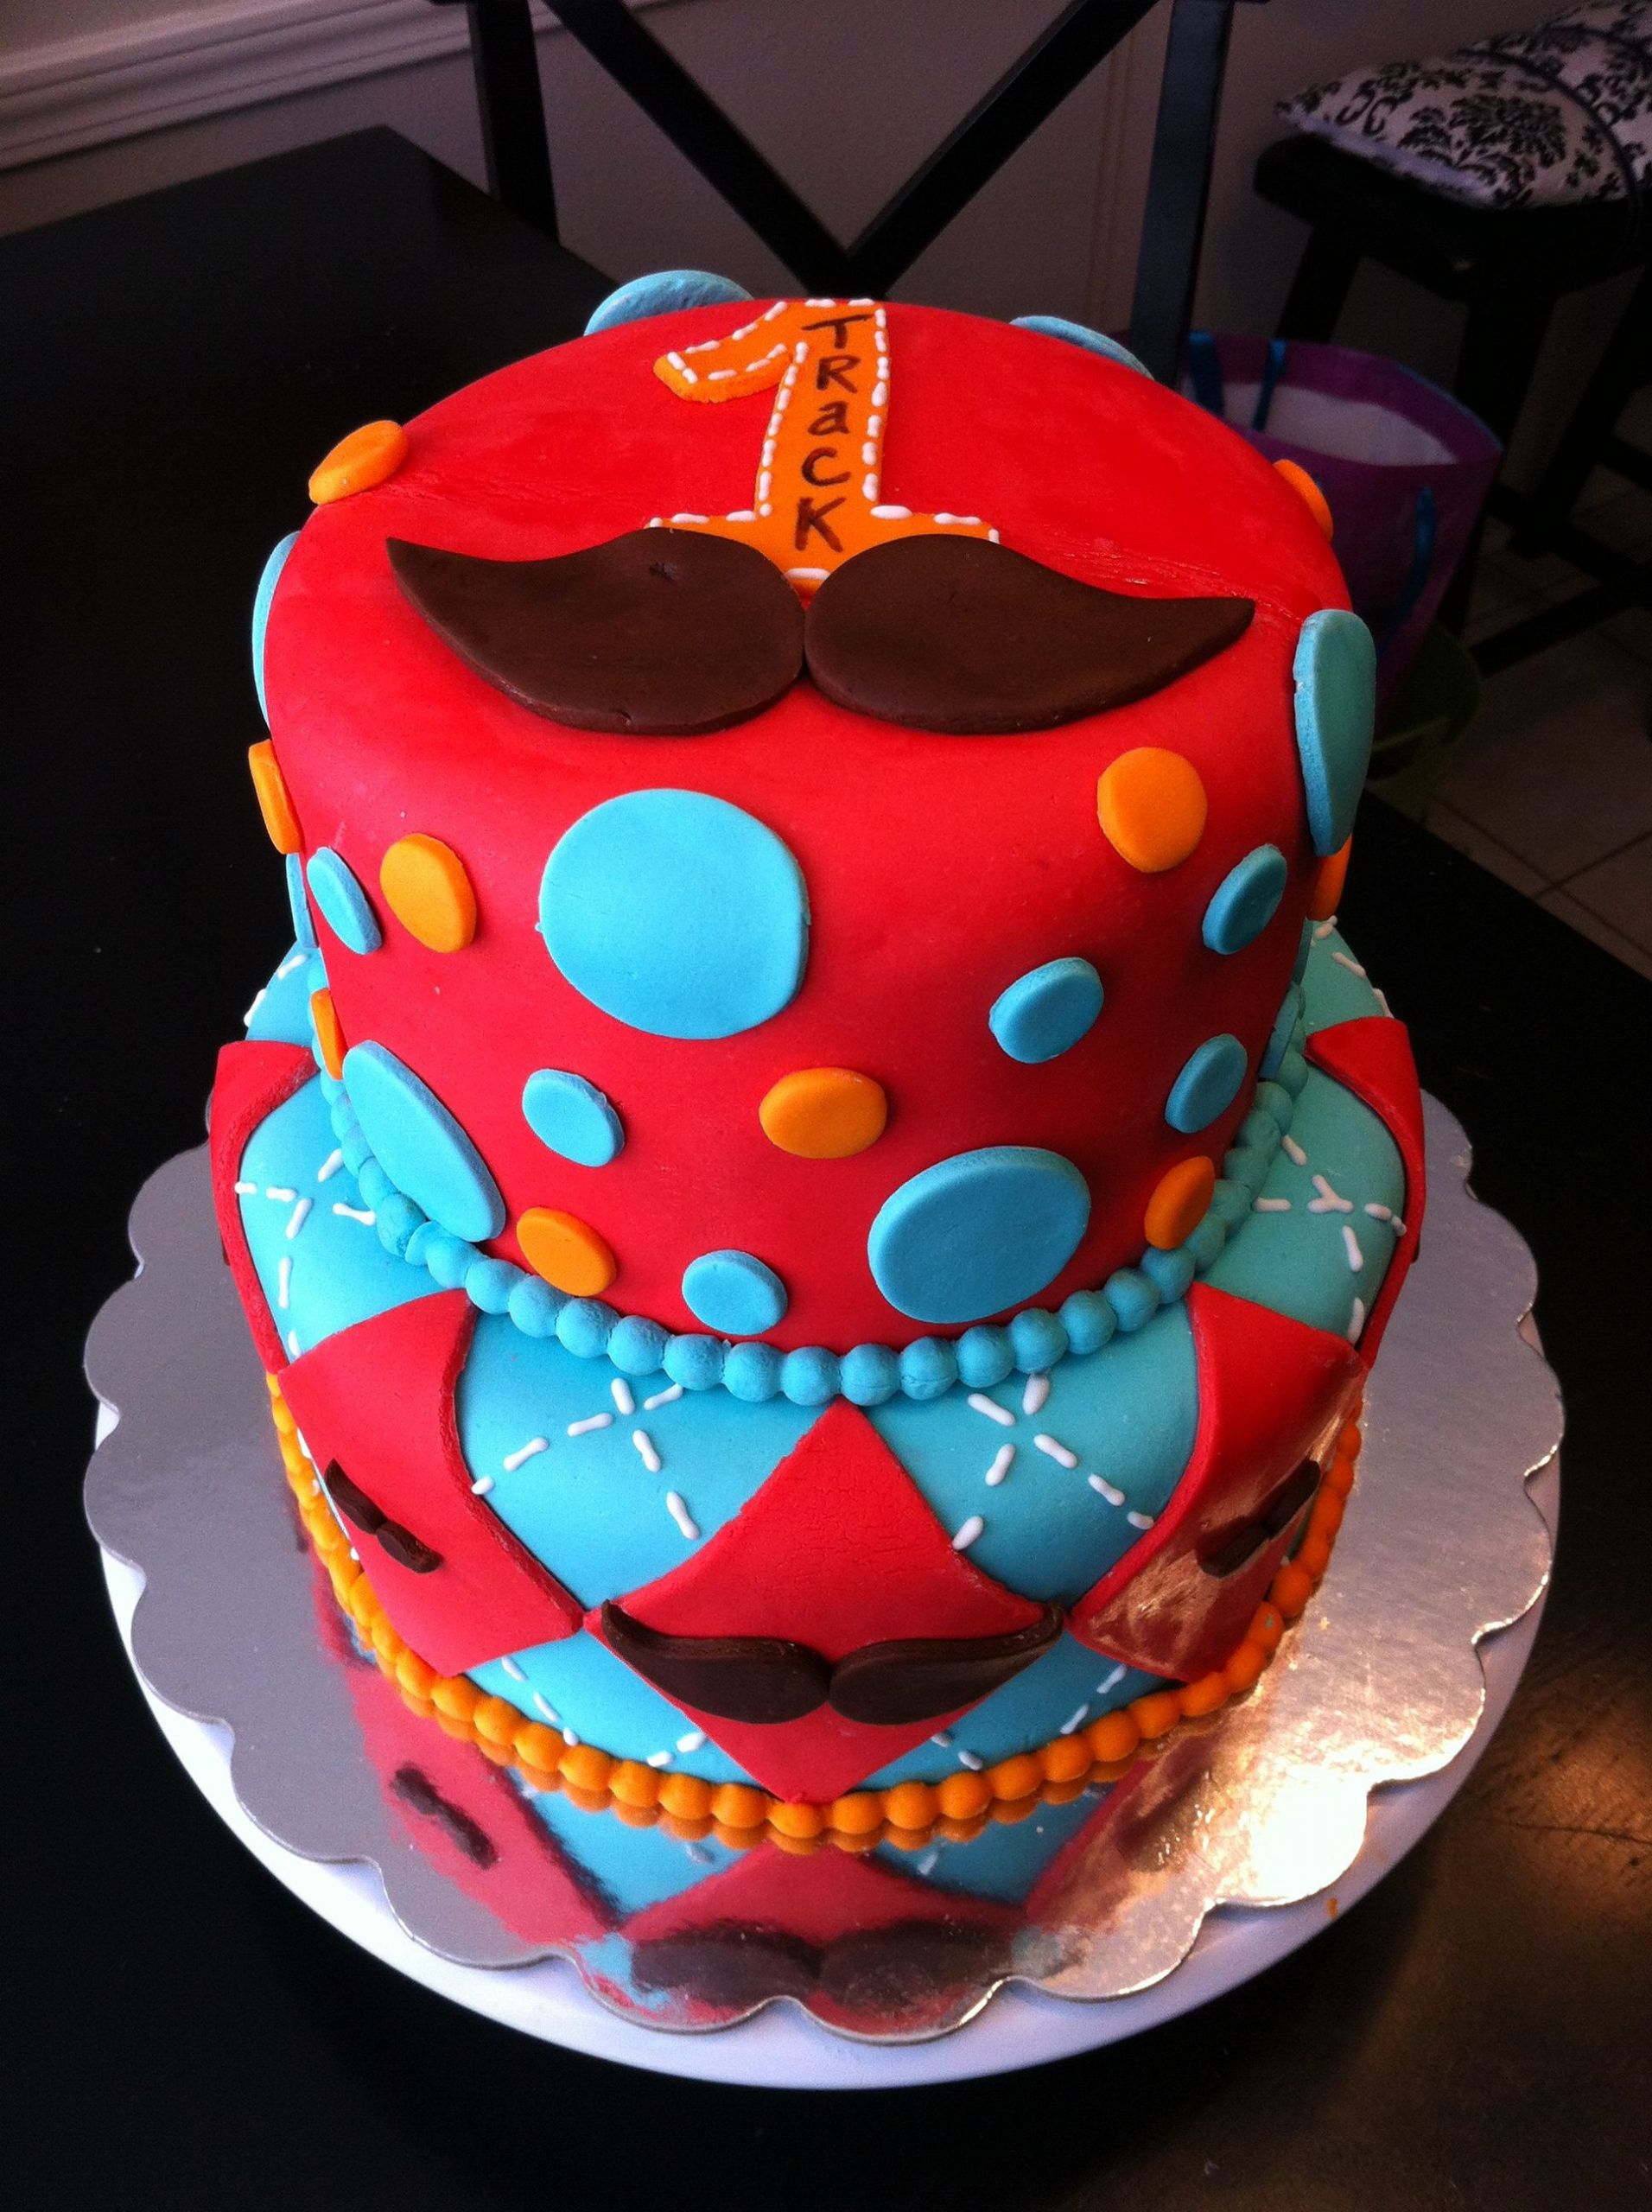 Mustache Birthday Cake
 Mustache themed birthday cake with argyle print